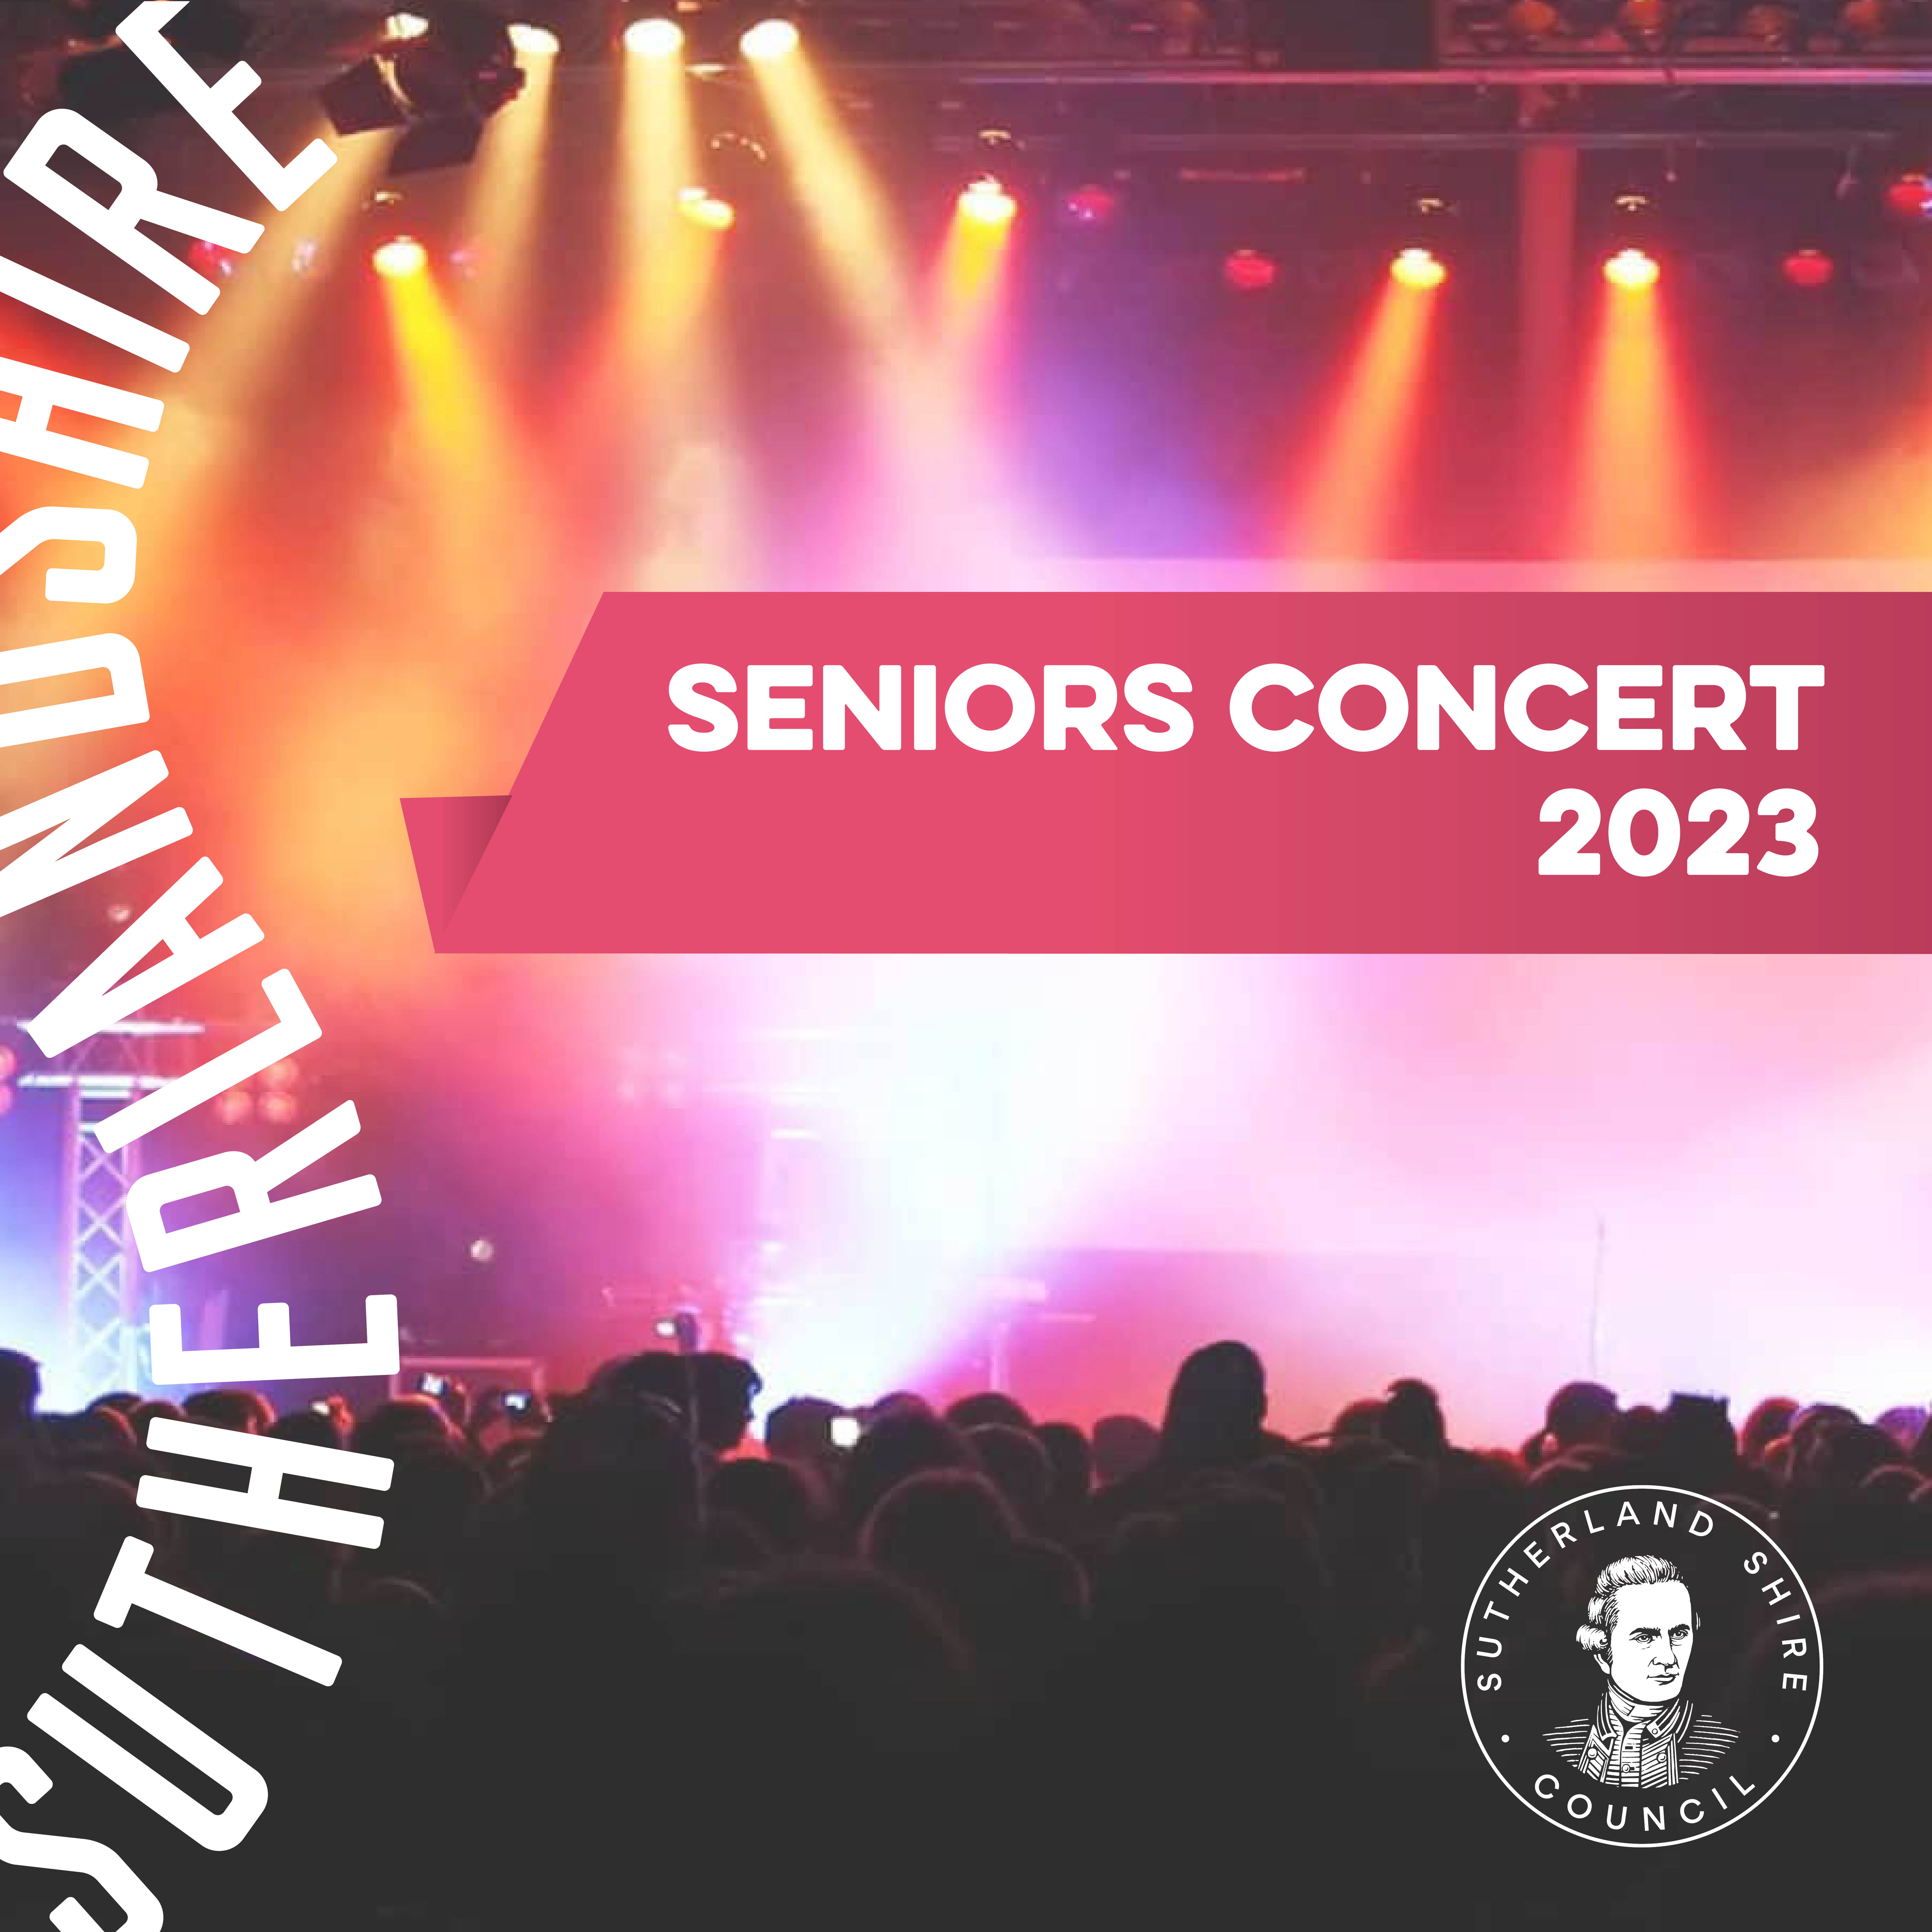 Seniors Concert 2023